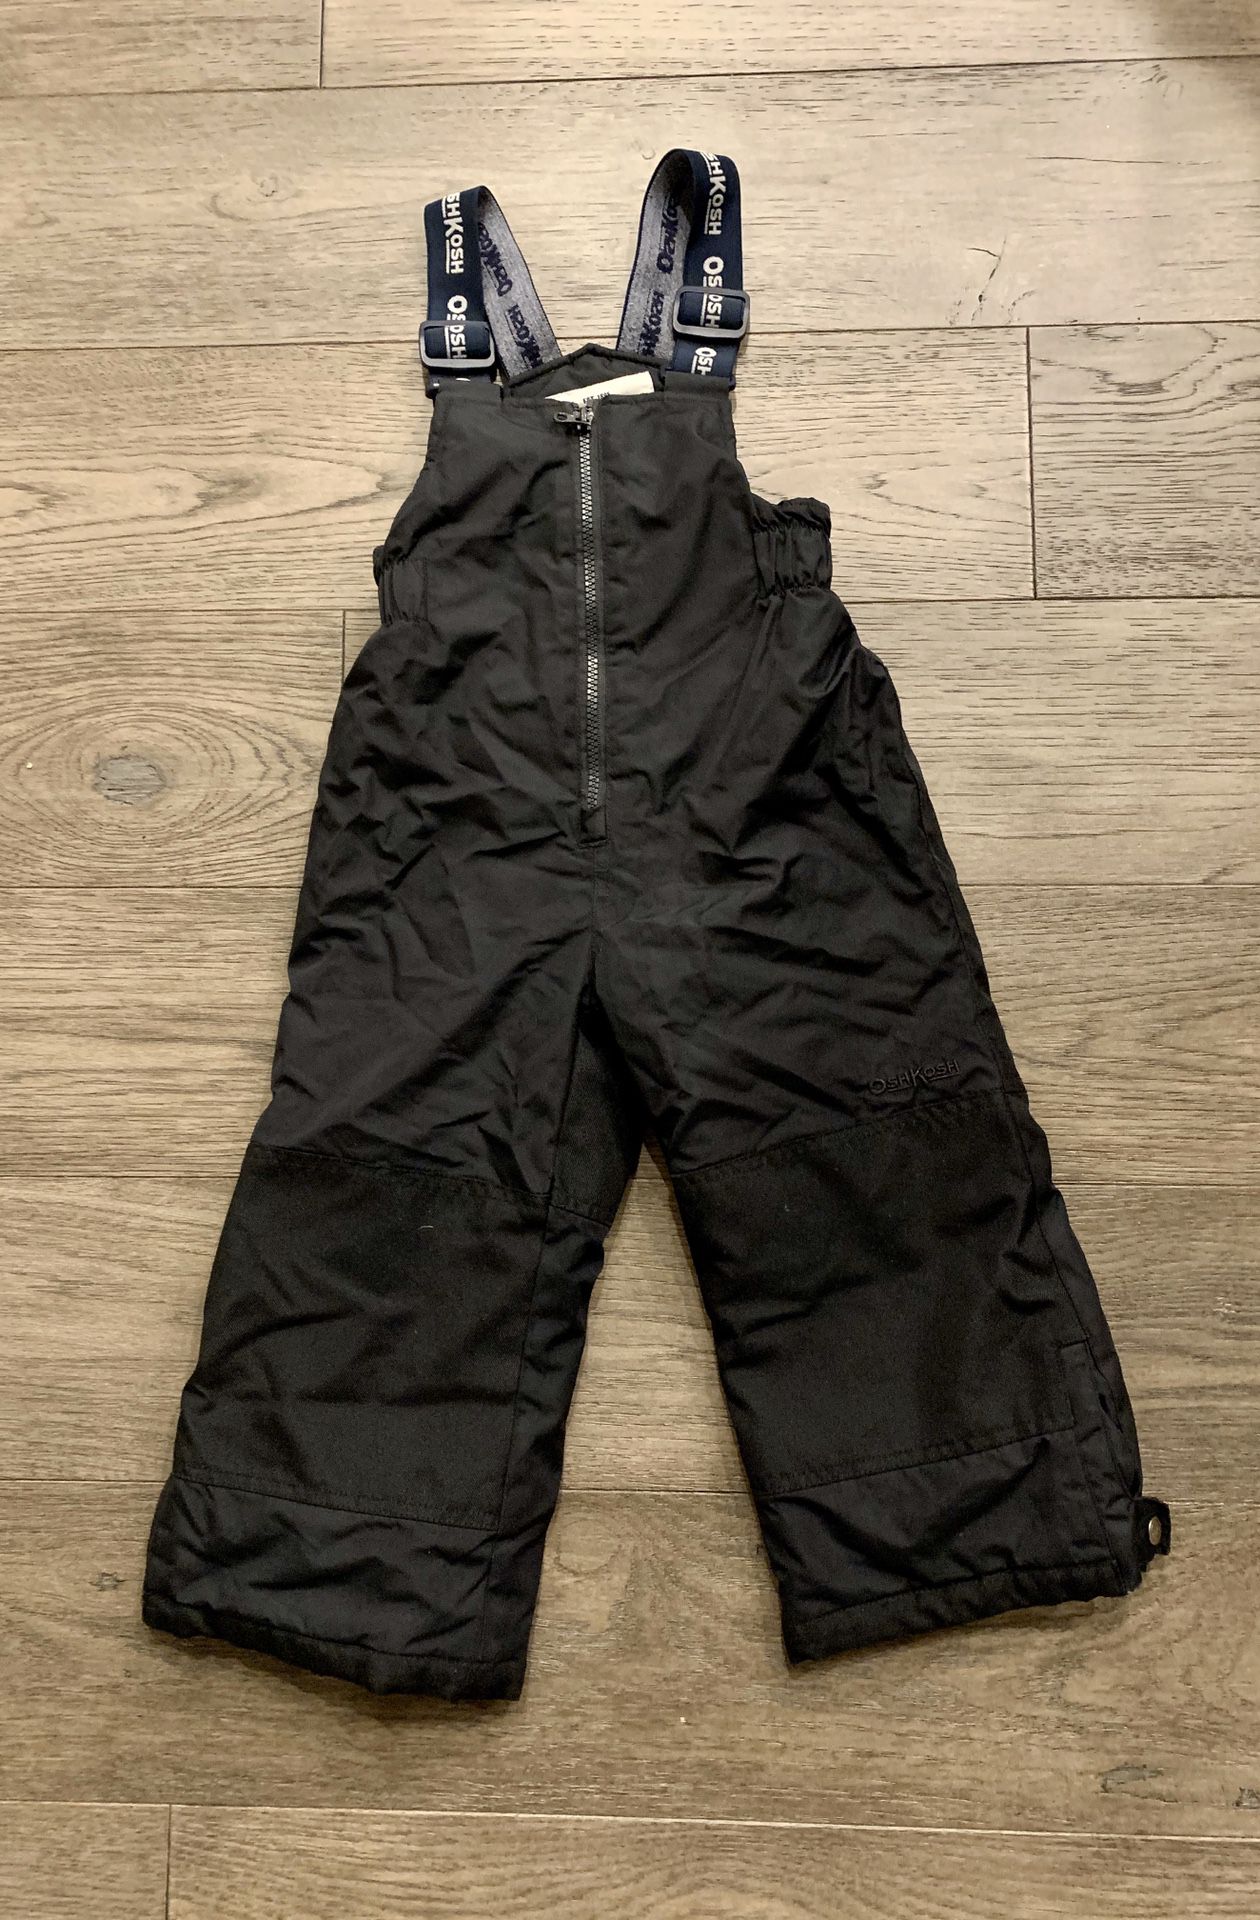 OshKosh snow pants / snow bib - size 4T for Sale in Redmond, WA - OfferUp